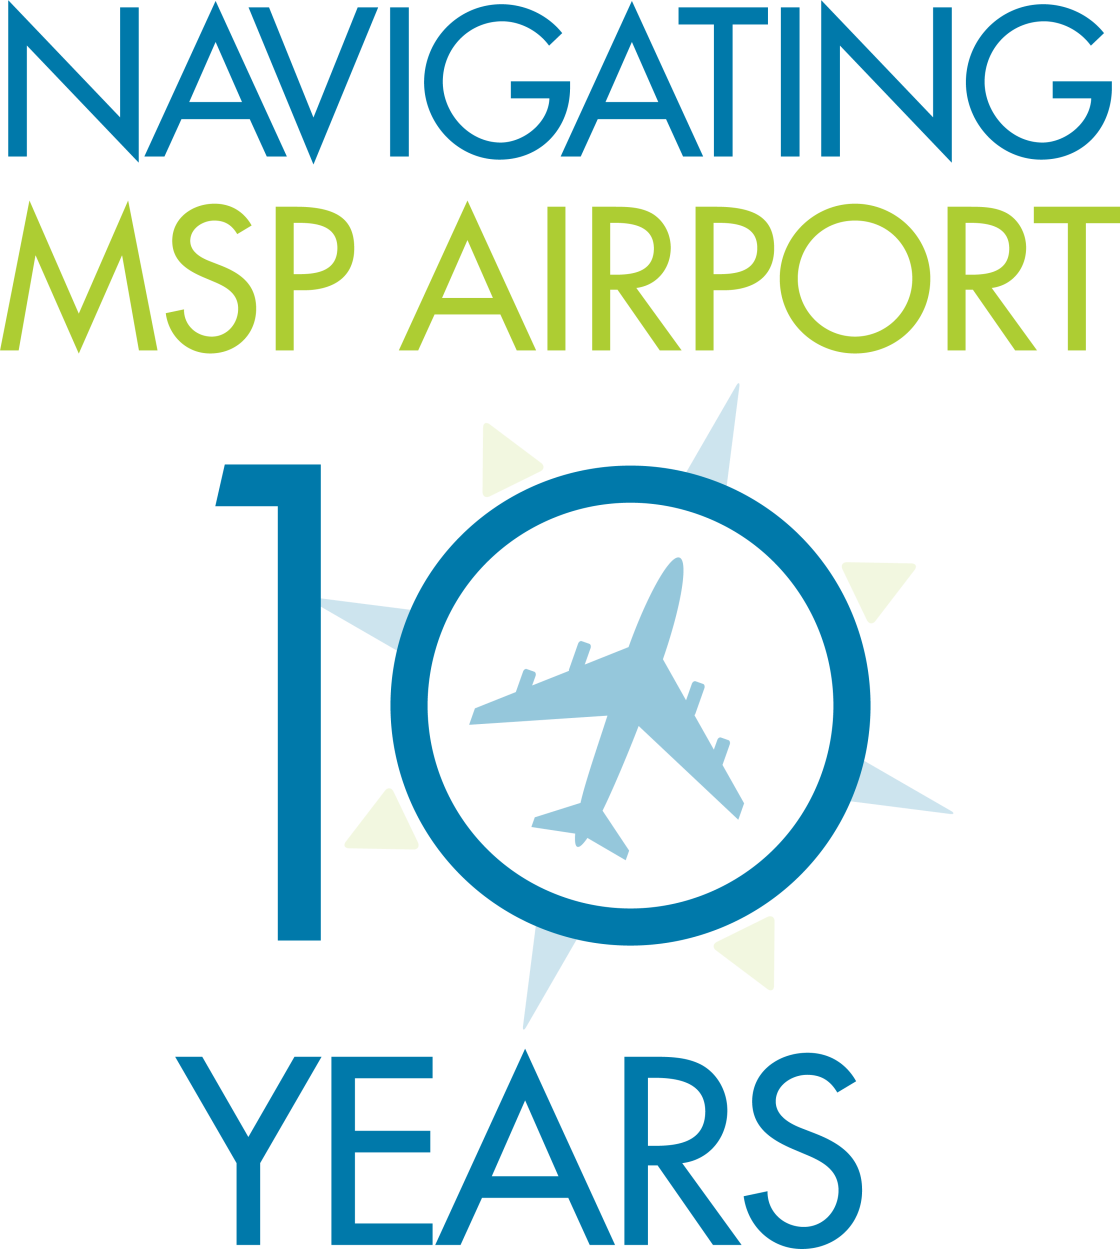 Logo reading "Navigating MSP Airport" Celebrating 10 Years! 